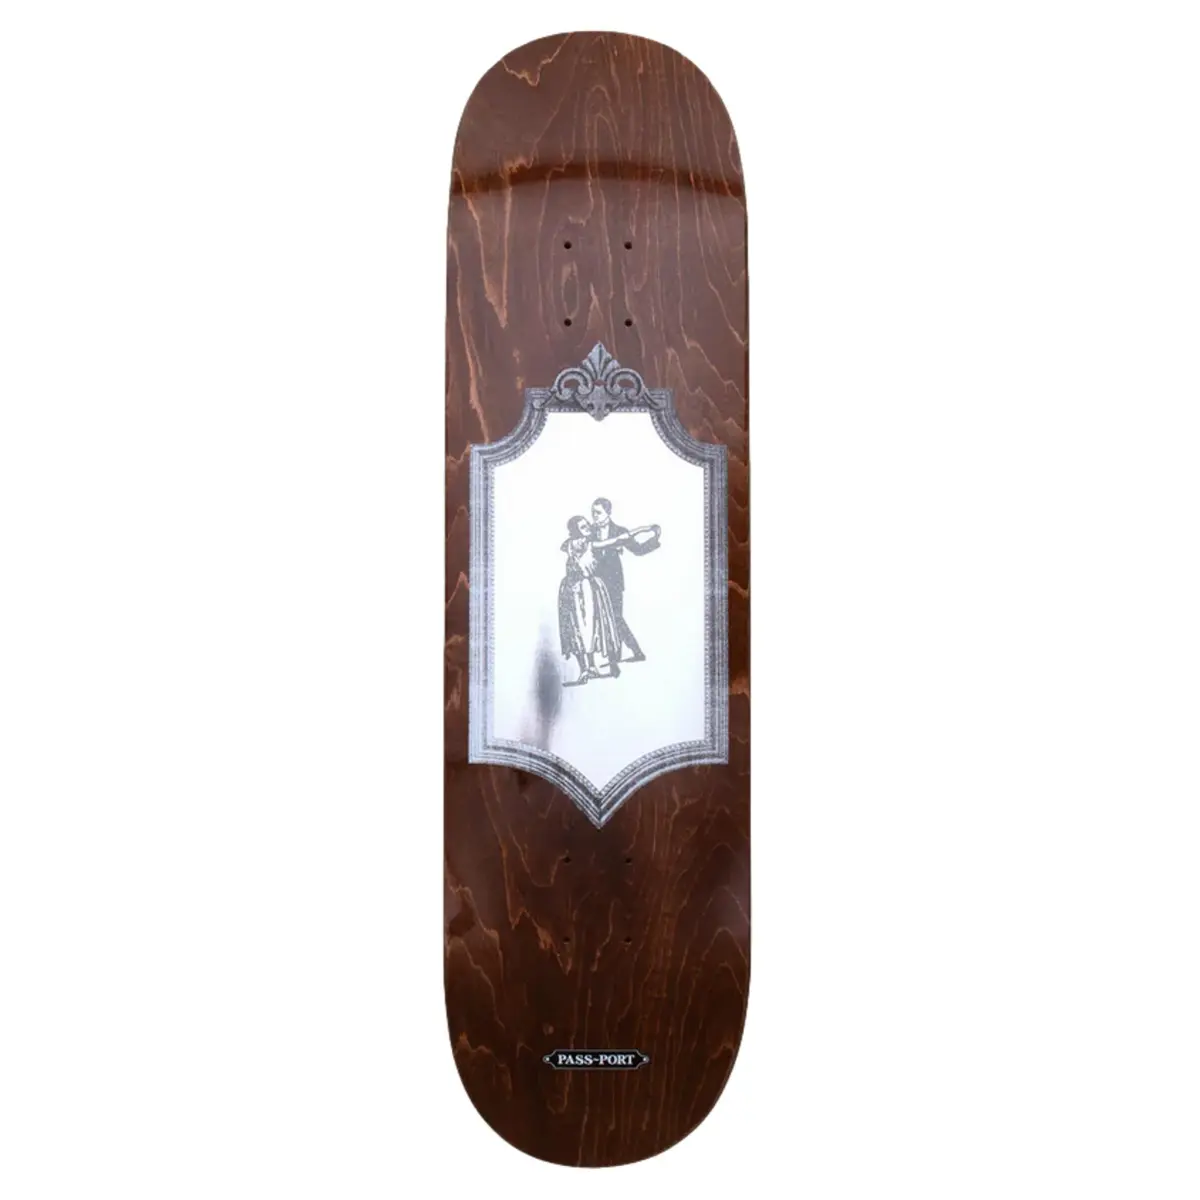 Pass port skateboards mirror valz deck 8.125